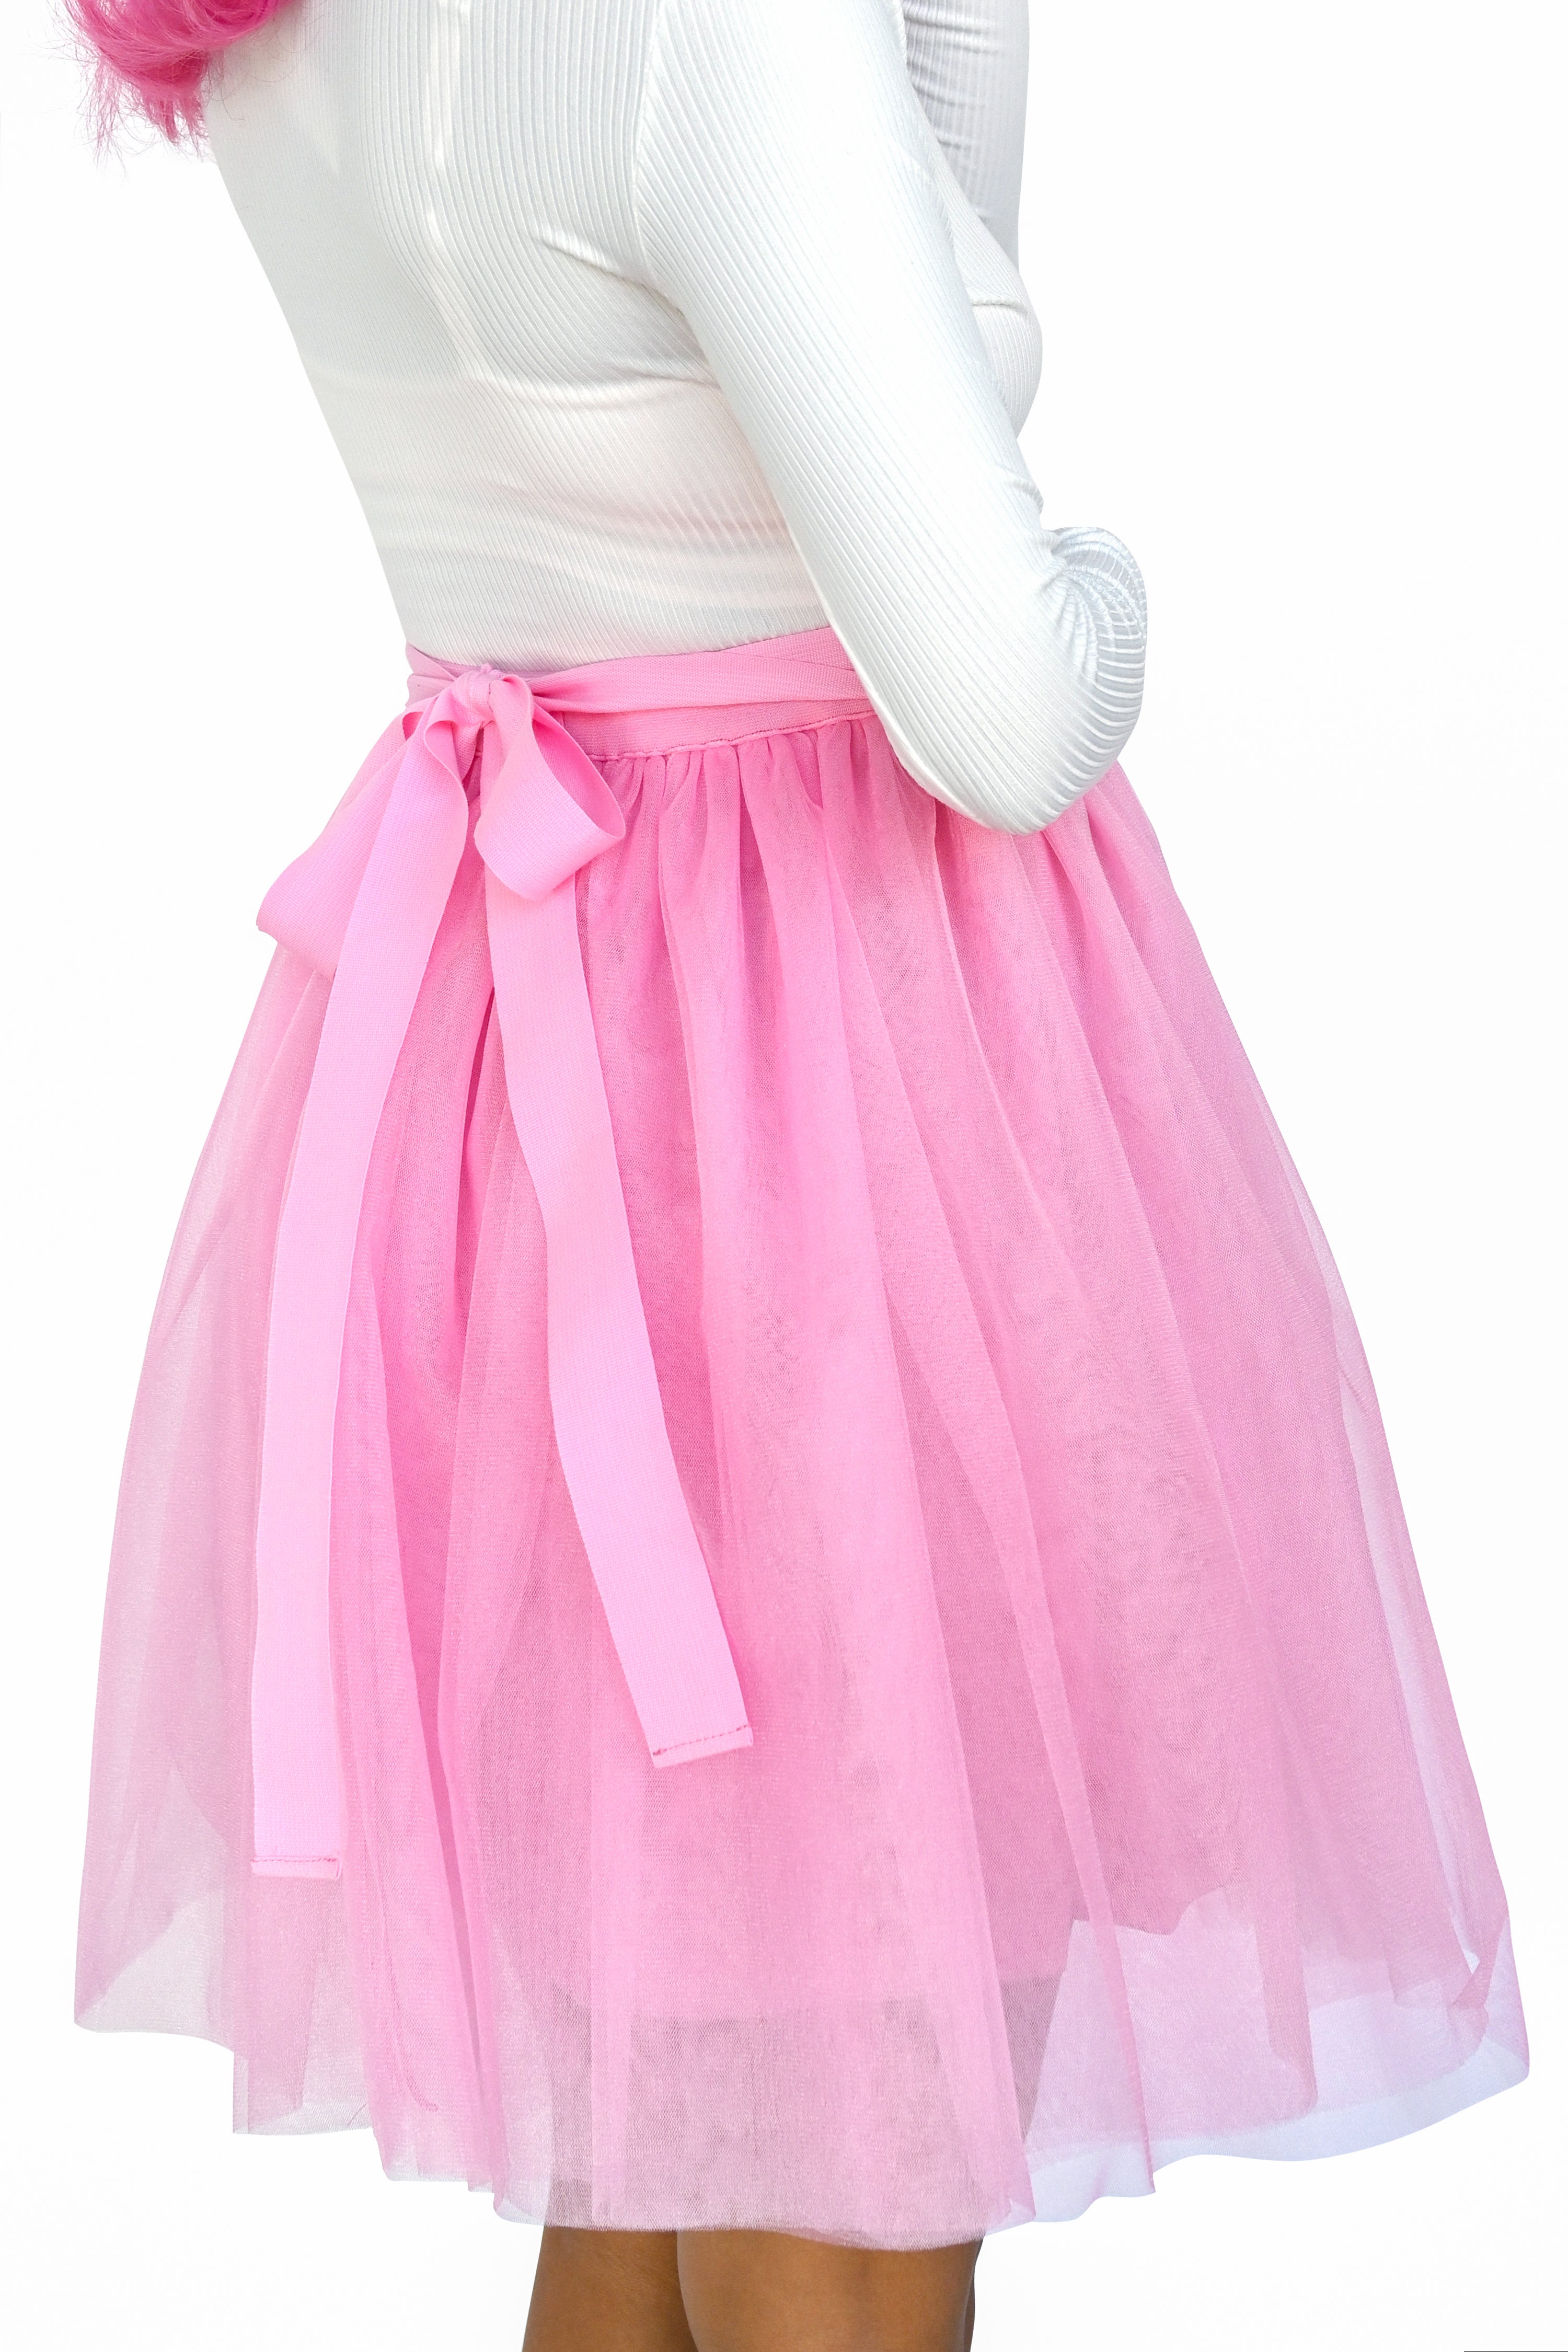 Laurel Pink Tulle Skirt - XS-XL left!